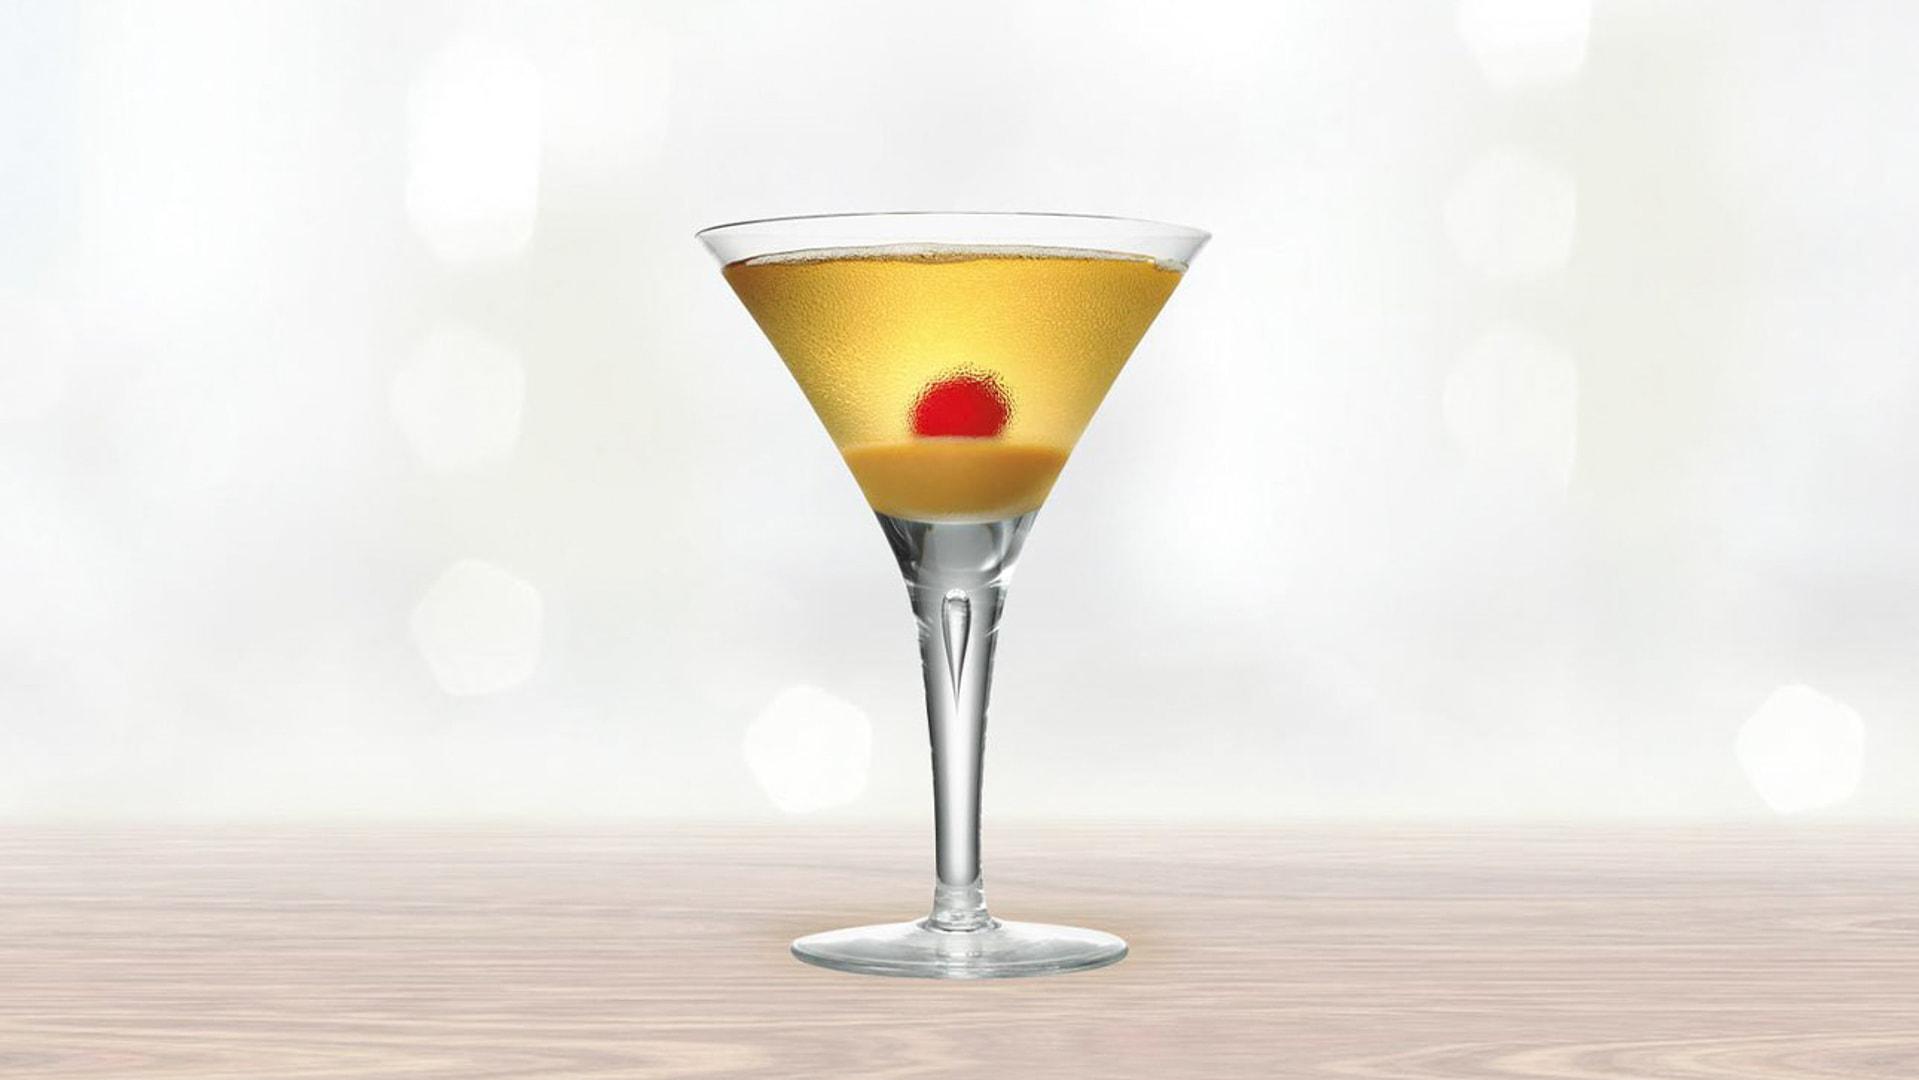 Creamy Caramel Martini on plain background